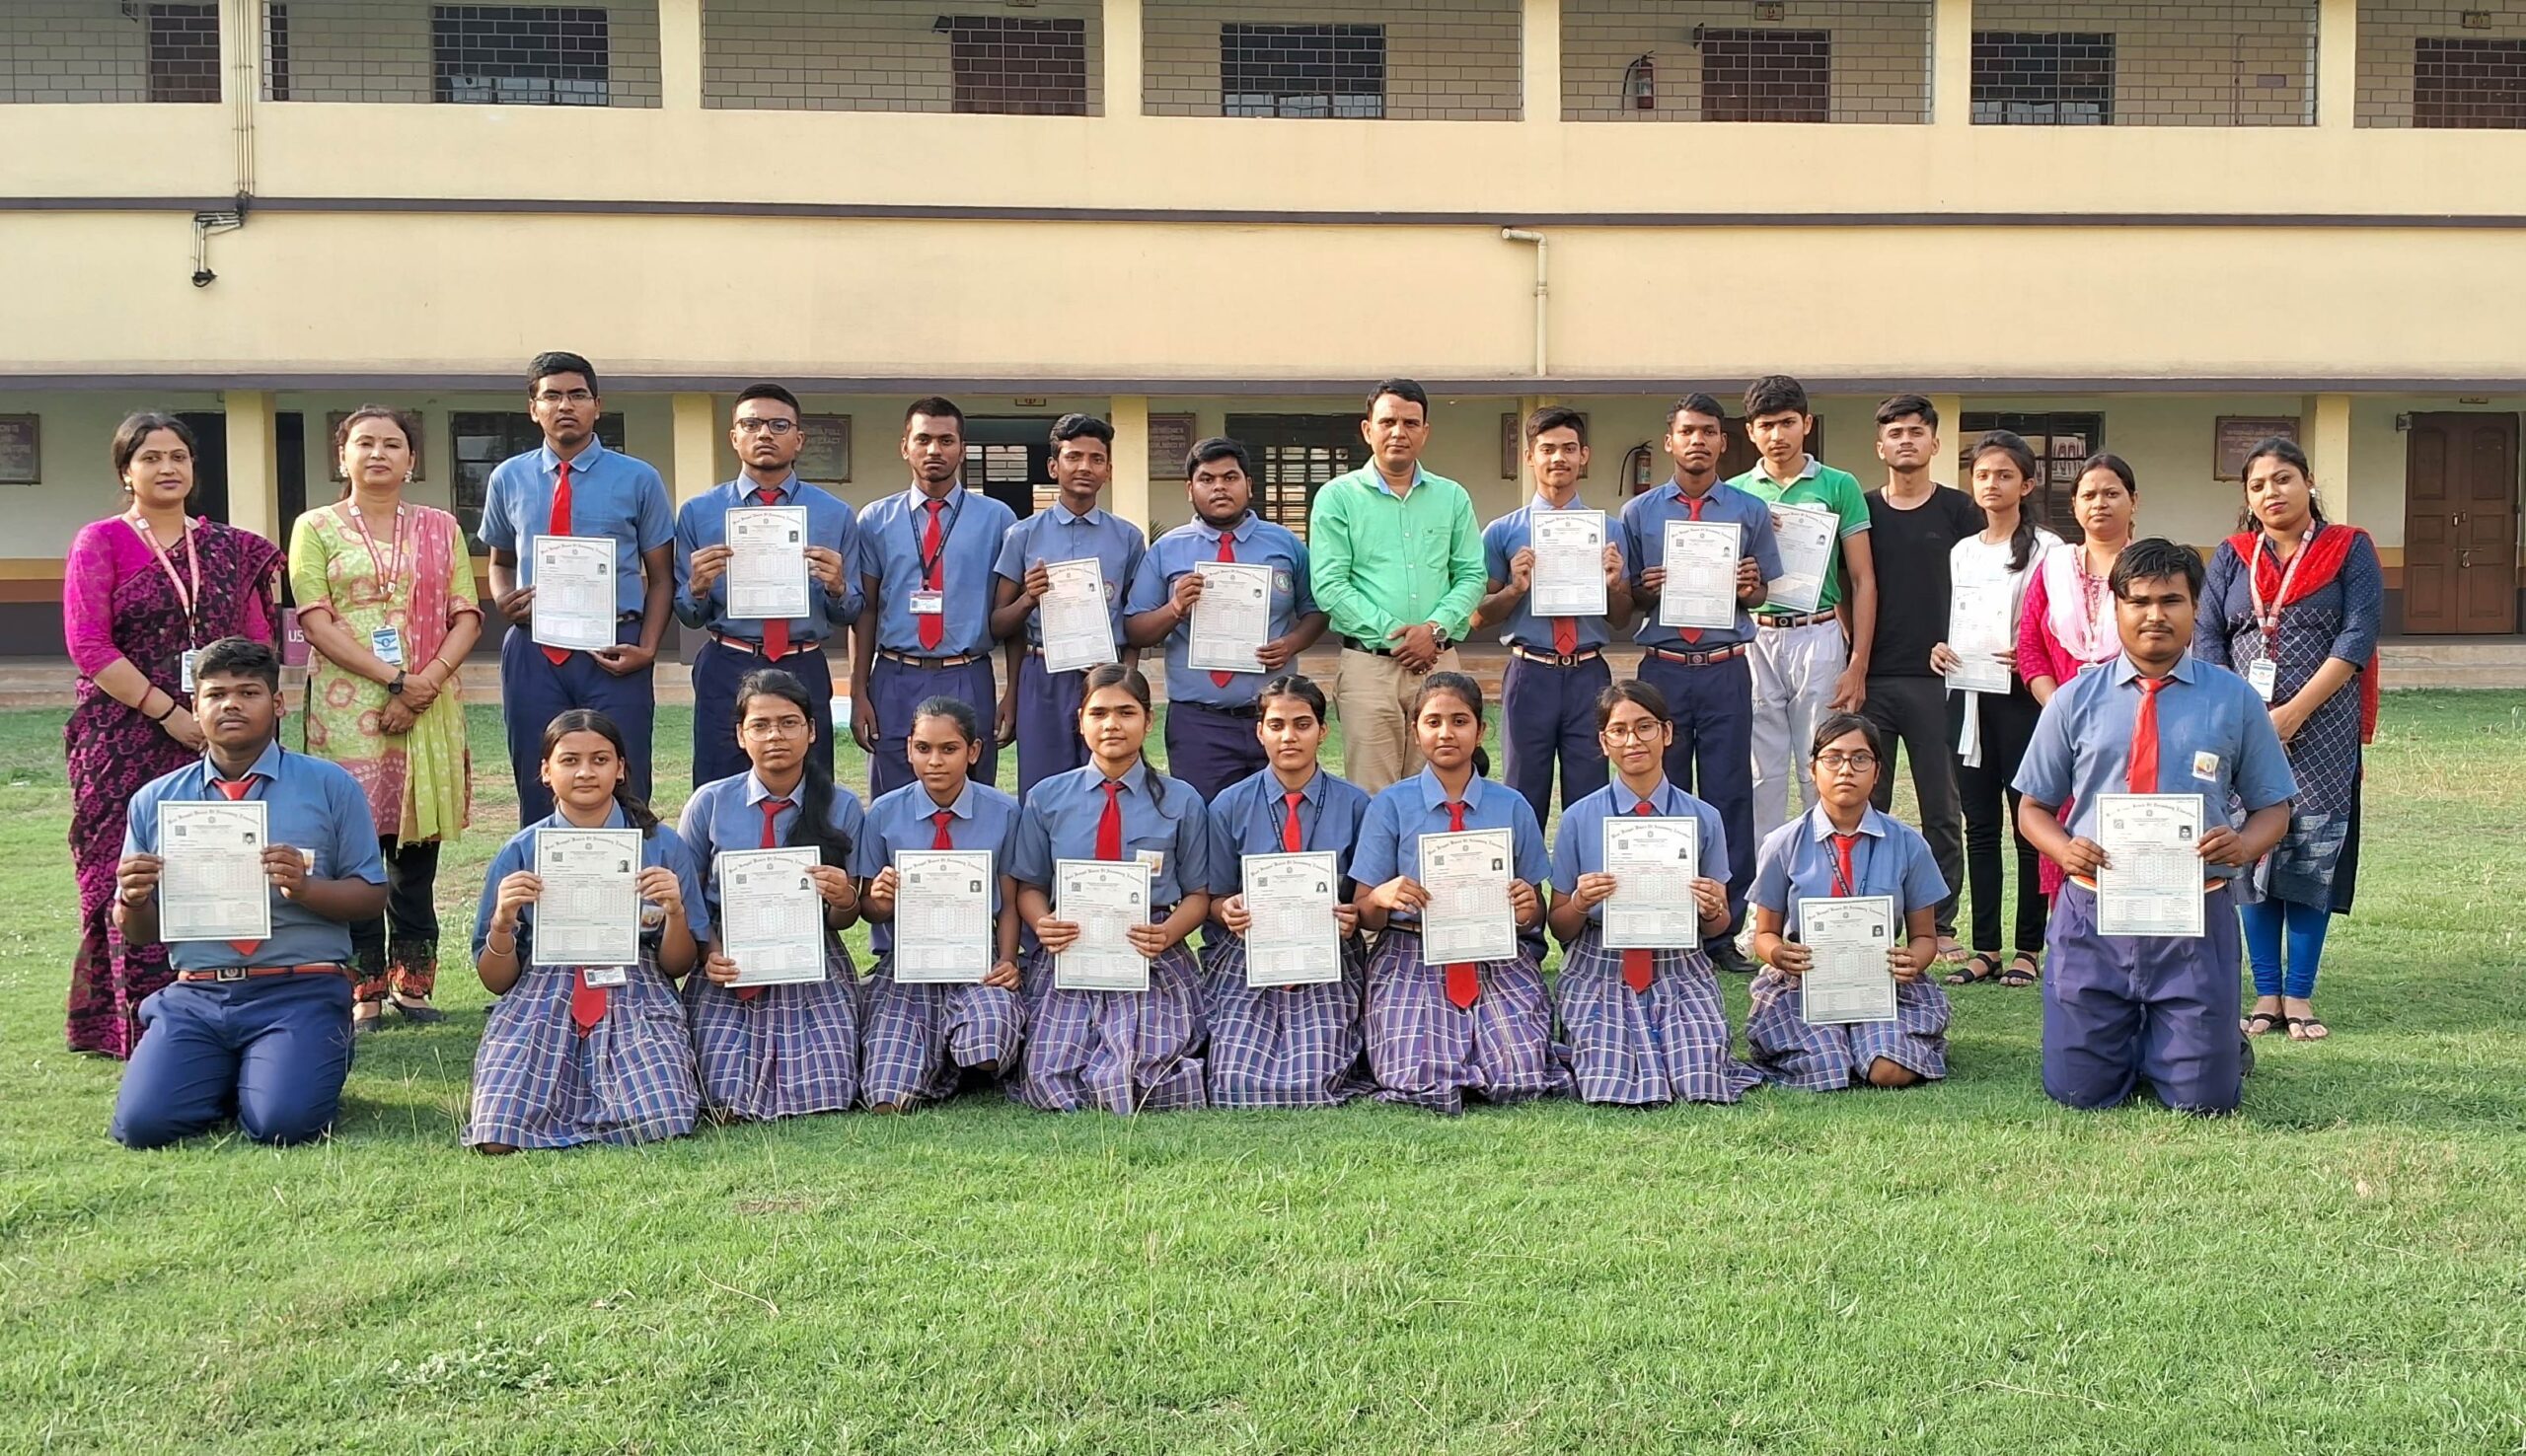 Sant Nirankari Public School : Roll of Honours